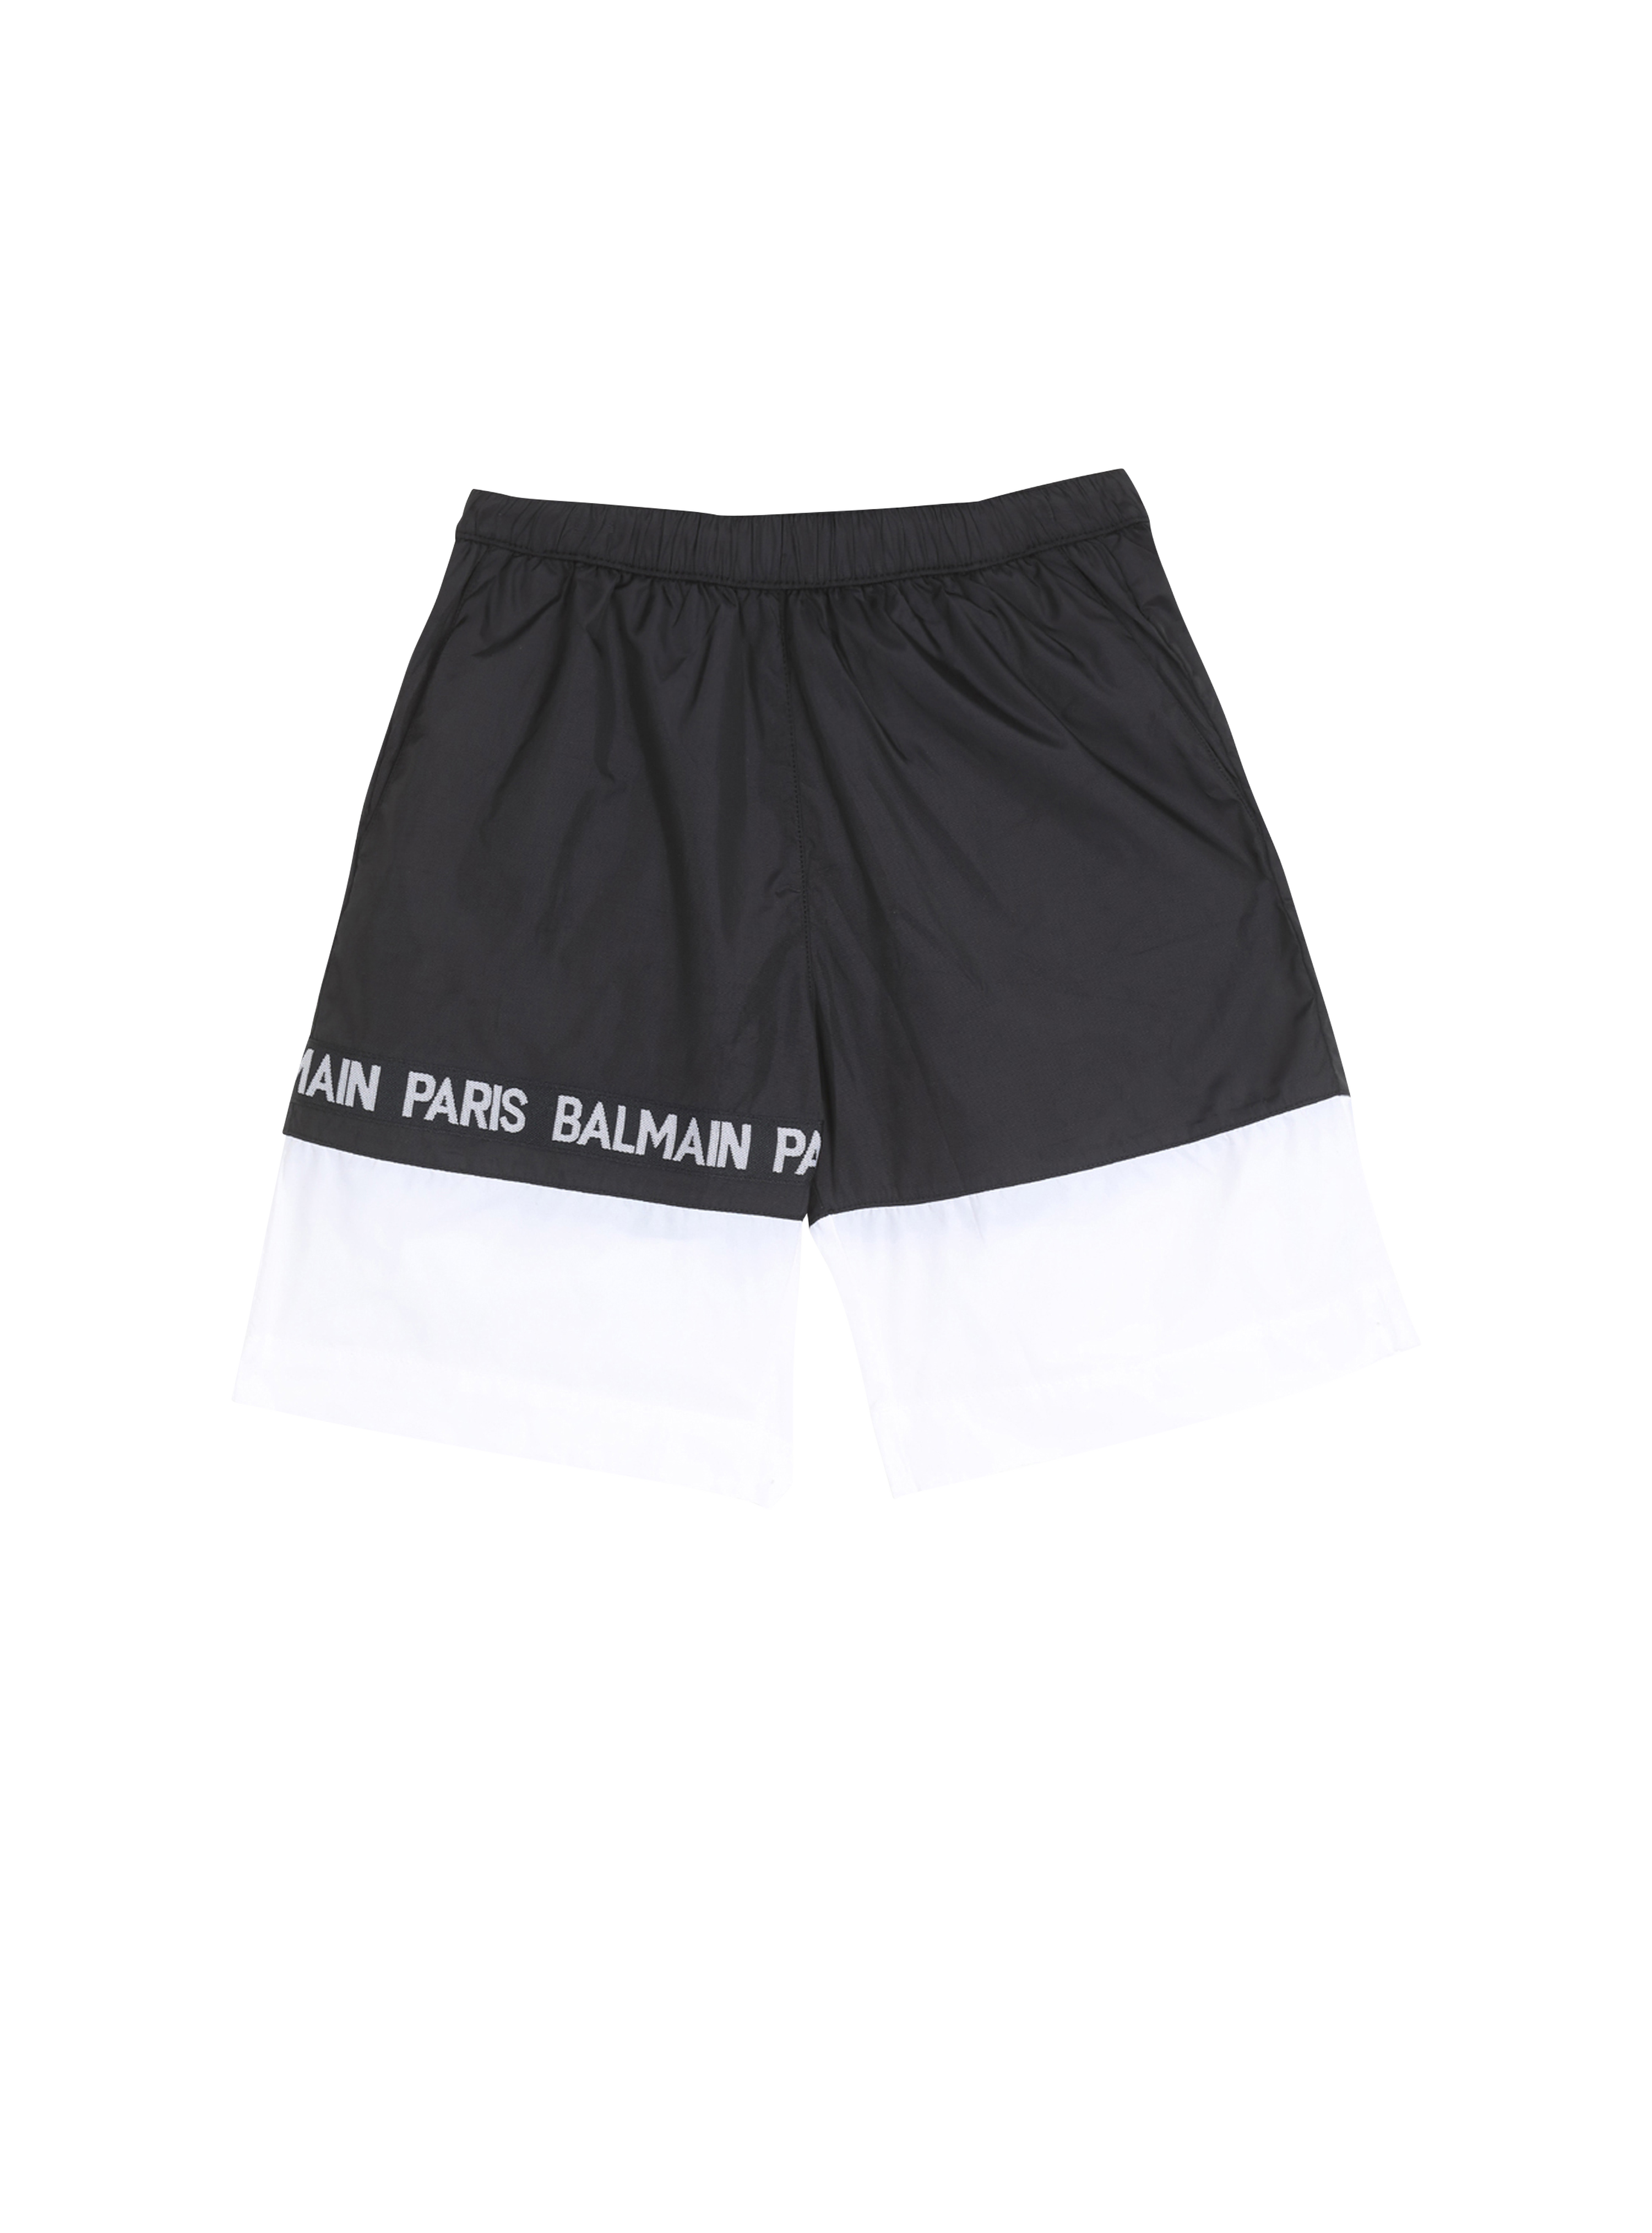 Bicolor shorts with Balmain logo print, black